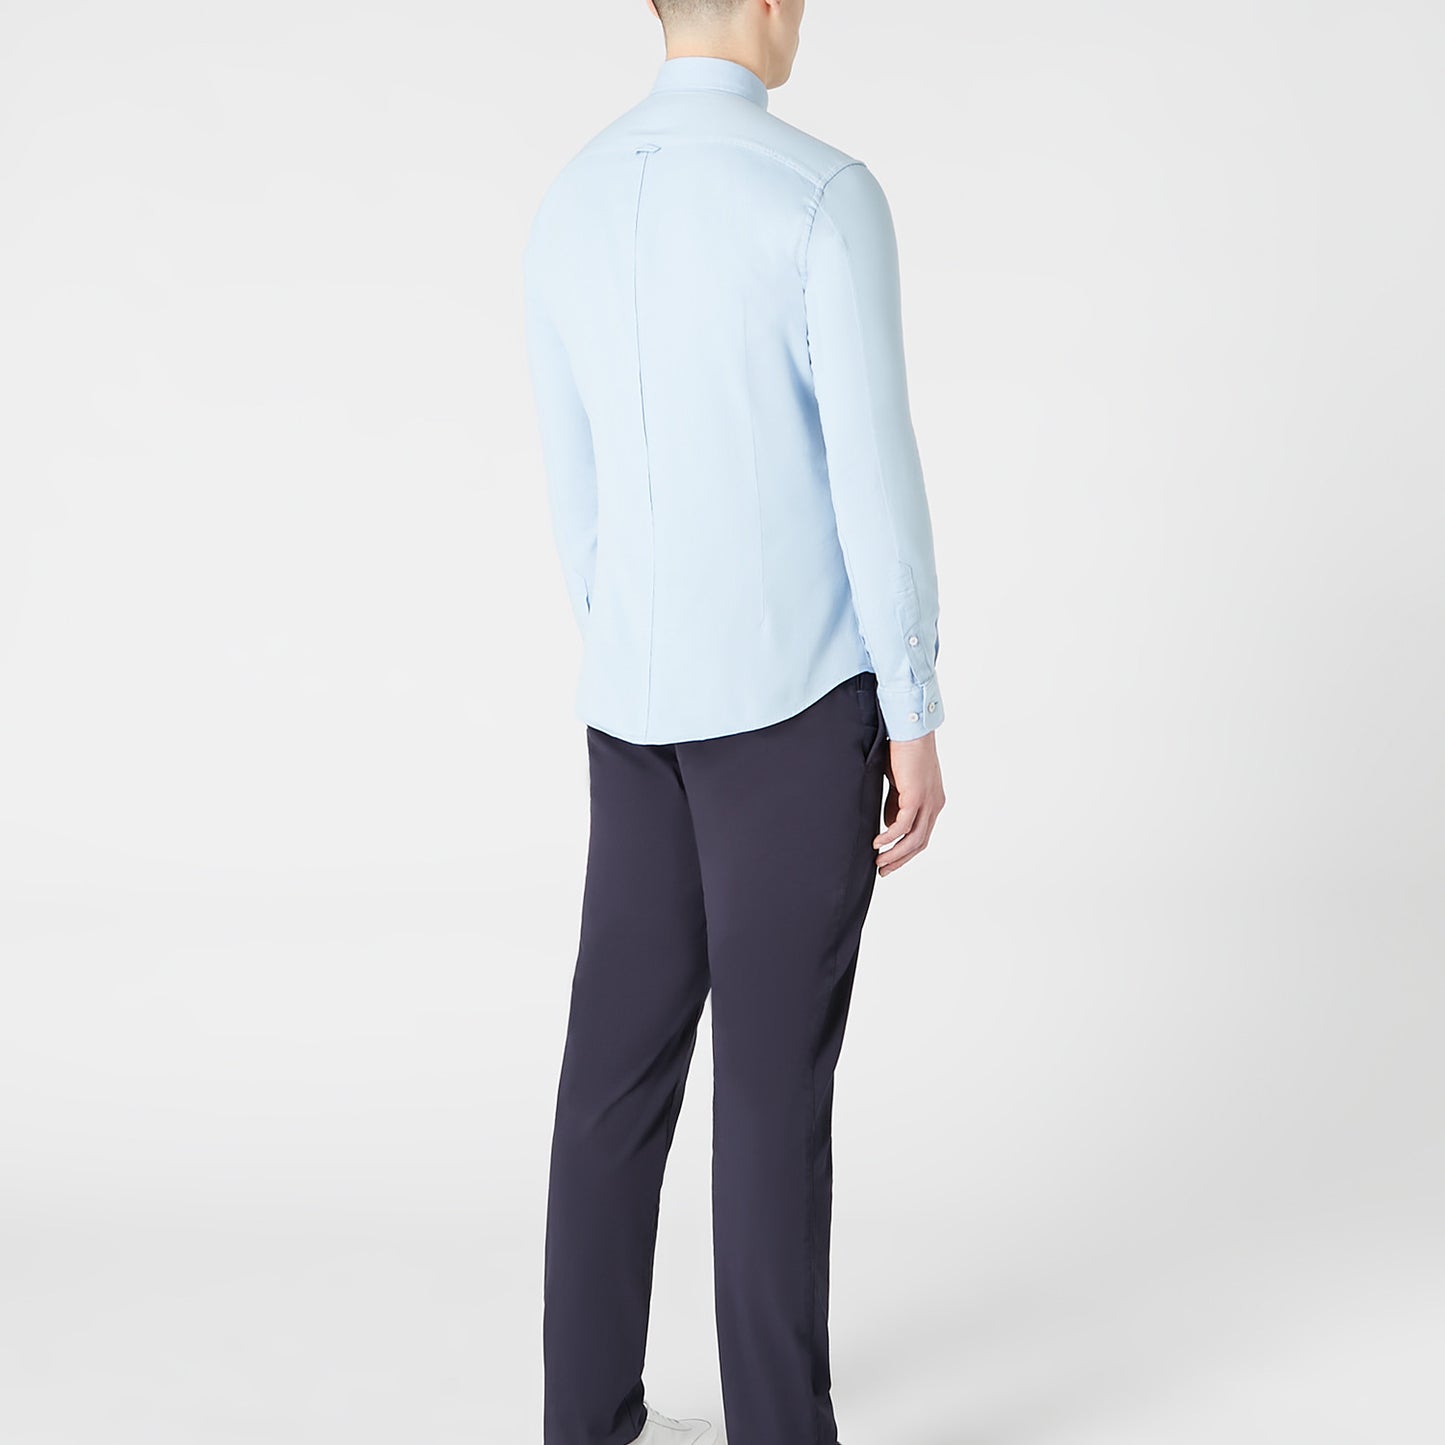 Remus Uomo 13570 22 Light Blue Slim/Ashton Long Sleeve Casual Shirt